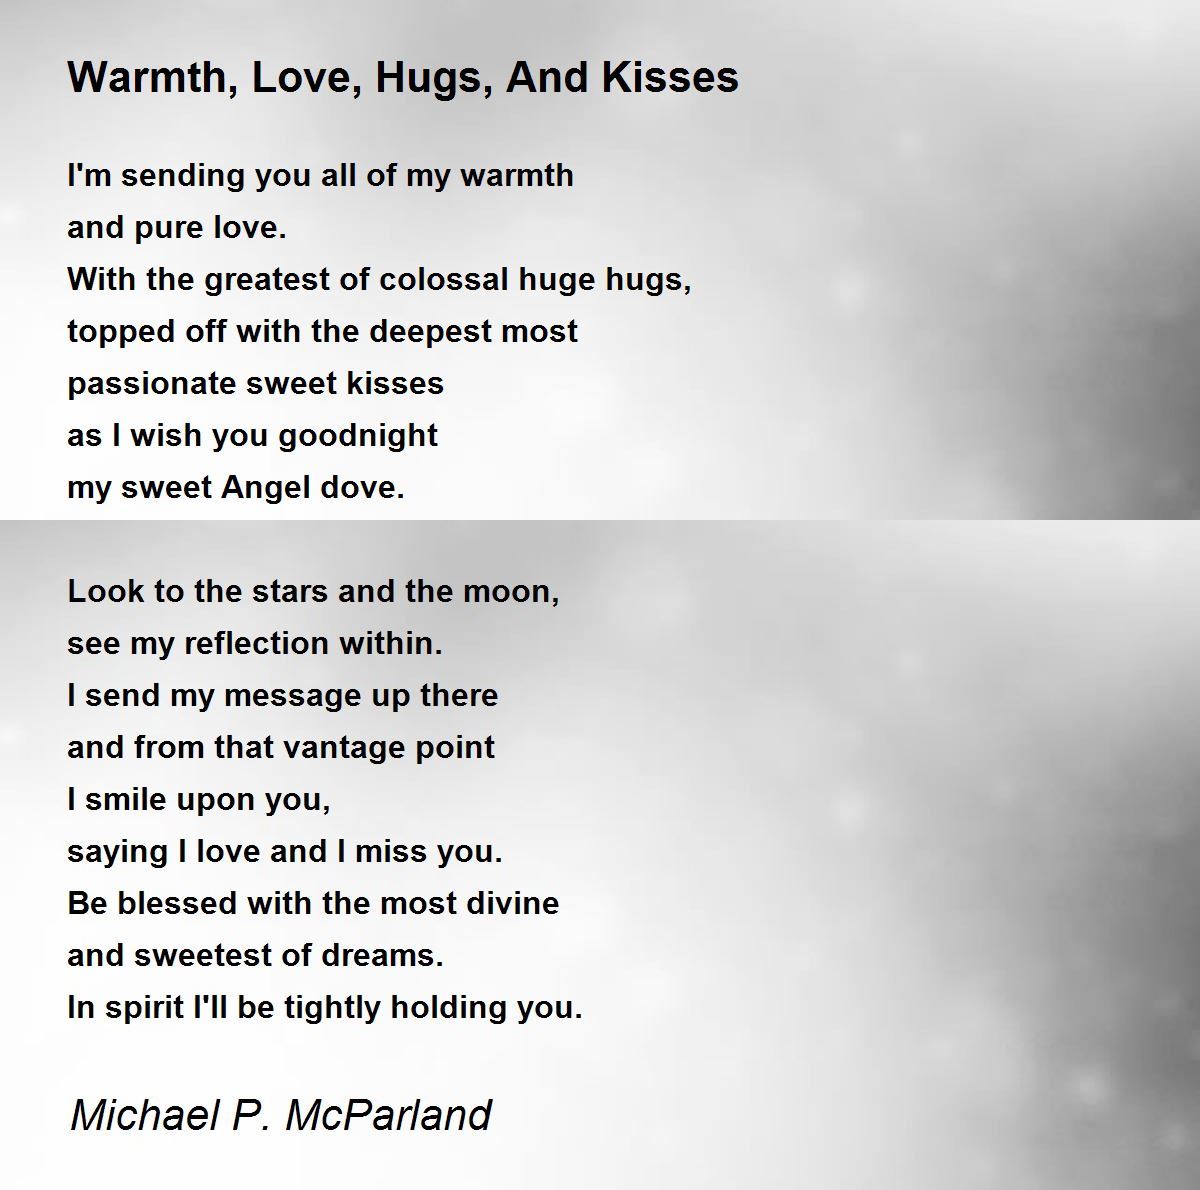 Warmth, Love, Hugs, And Kisses - Warmth, Love, Hugs, And Kisses ...